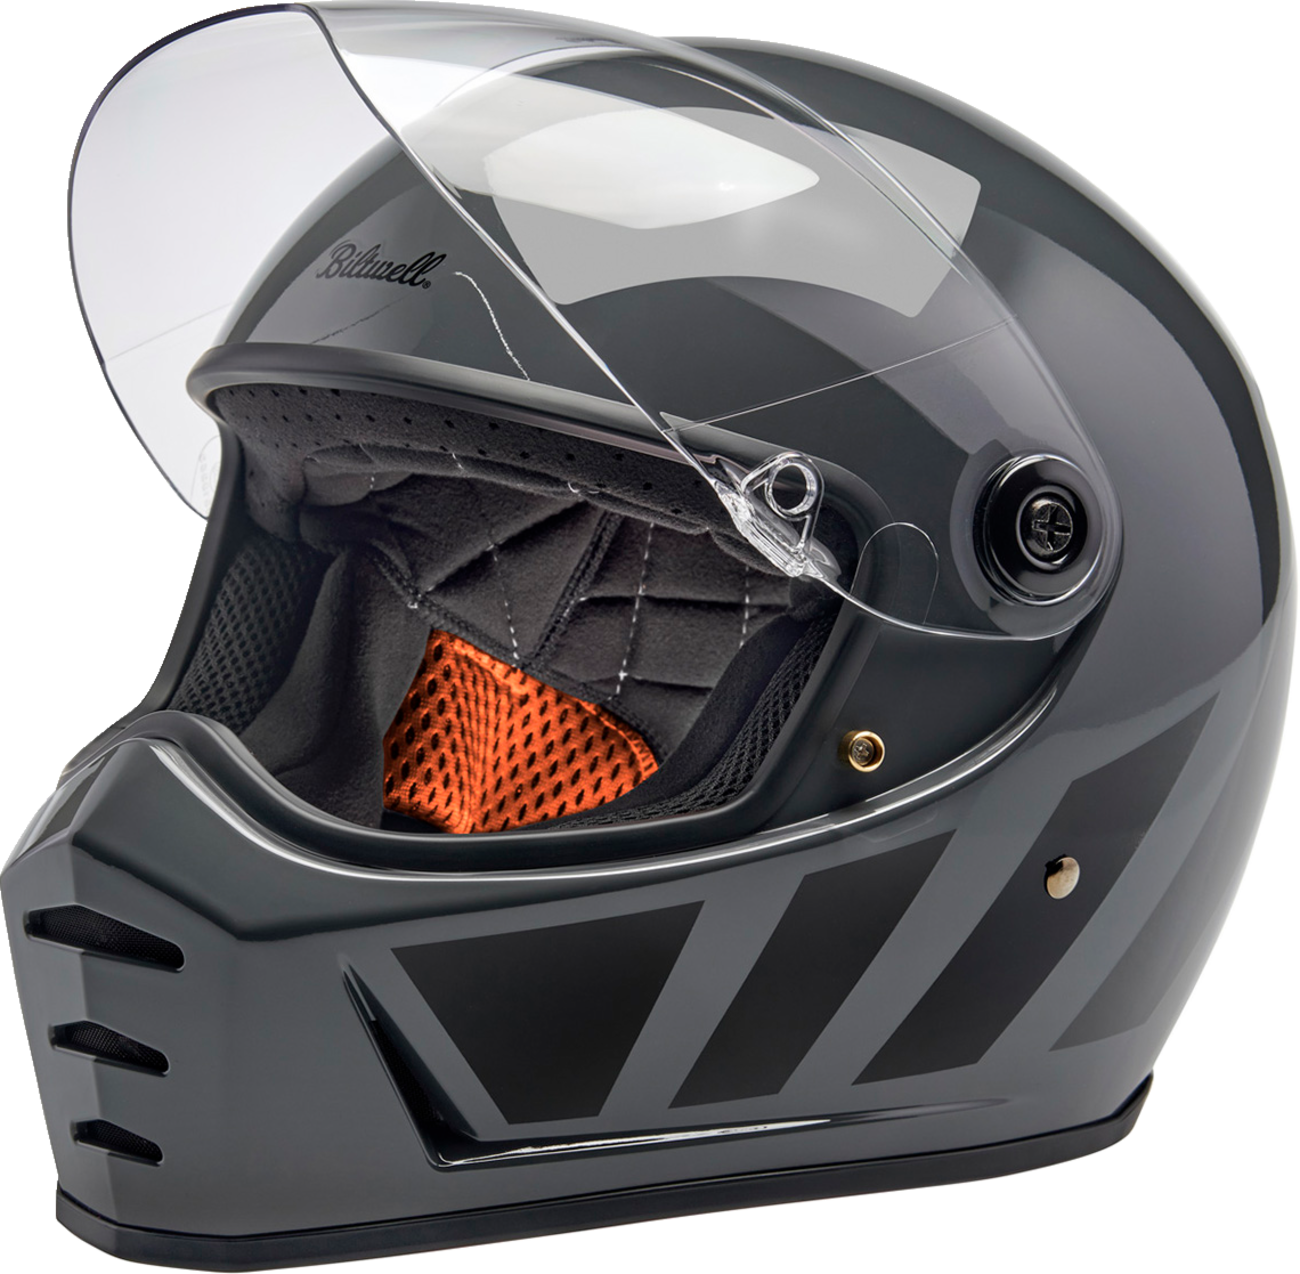 BILTWELL Lane Splitter Helmet - Storm Gray Inertia - Small 1004-569-502